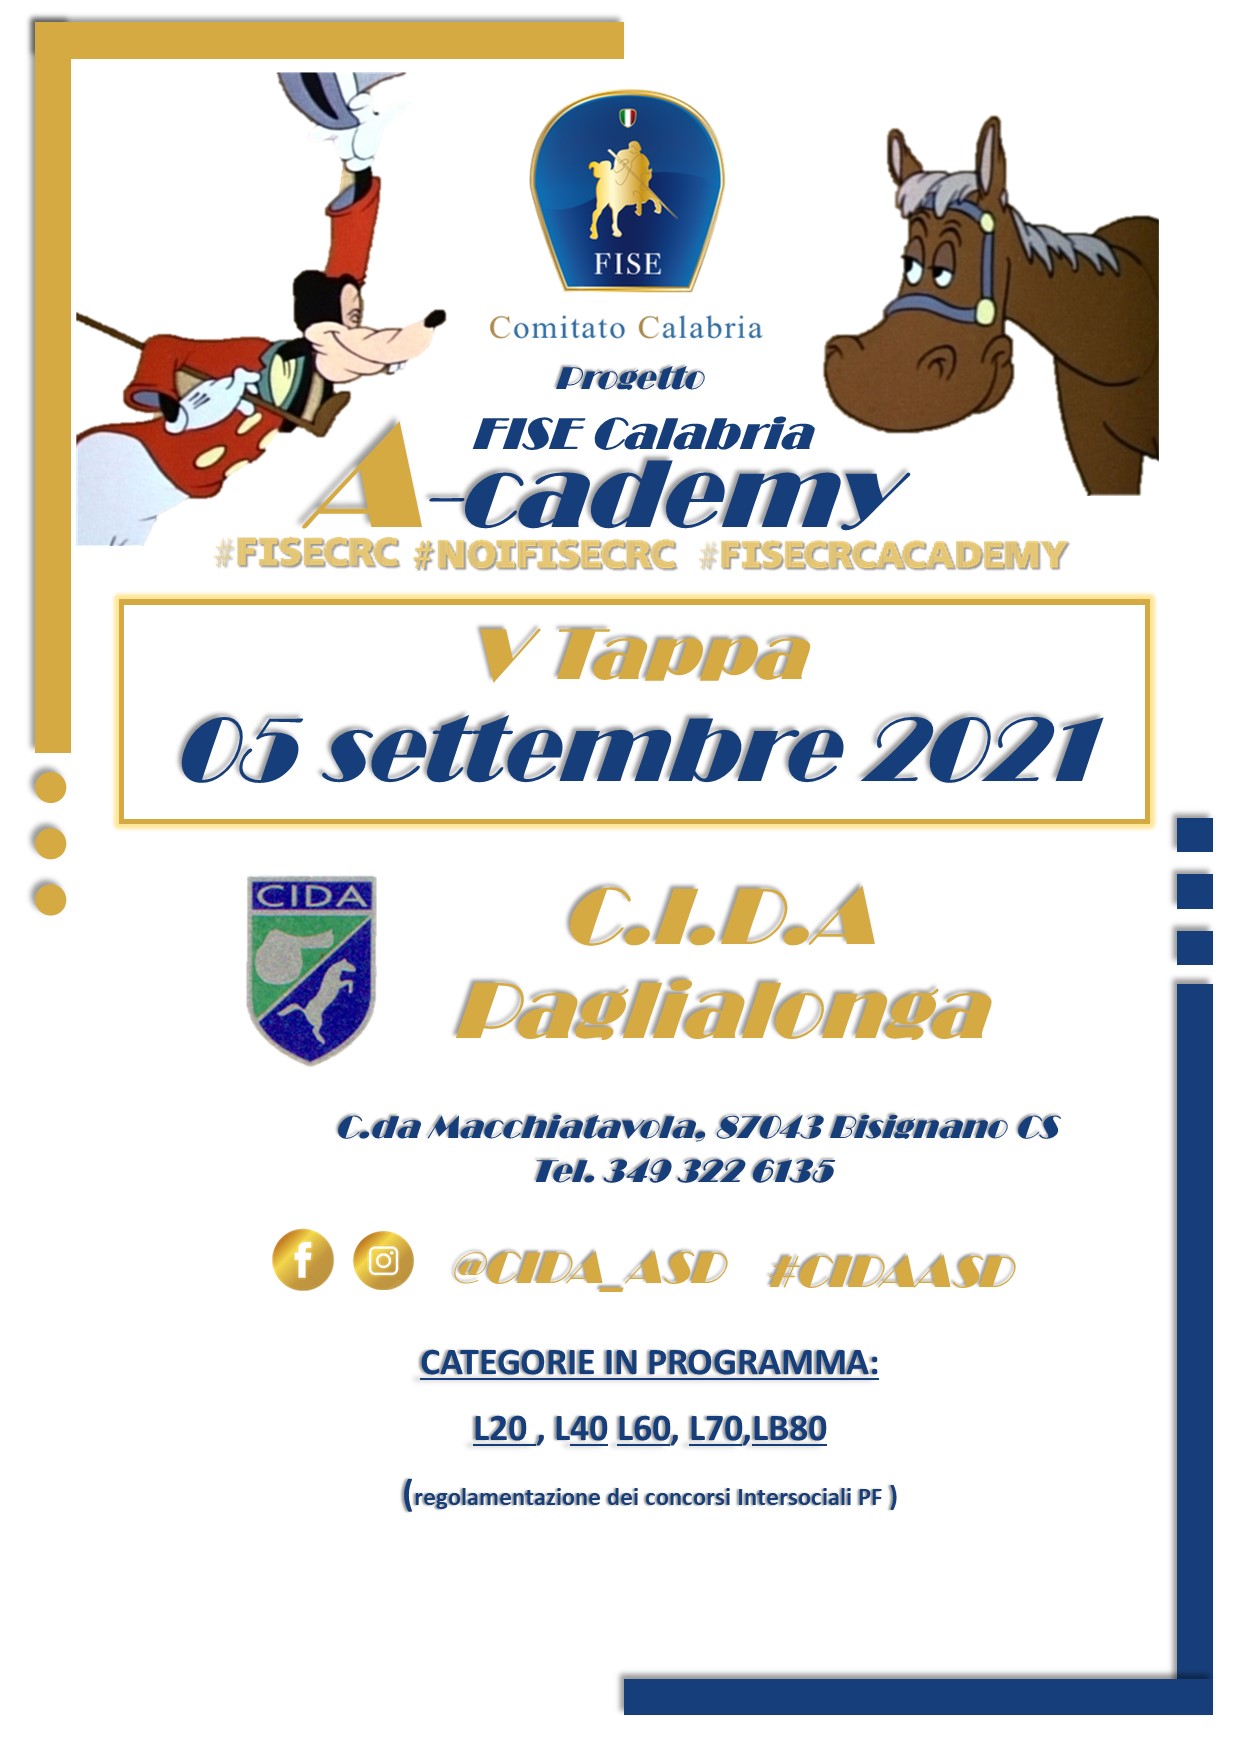 FIse Calabria A cademy Locandina 5 Settembre CIDA